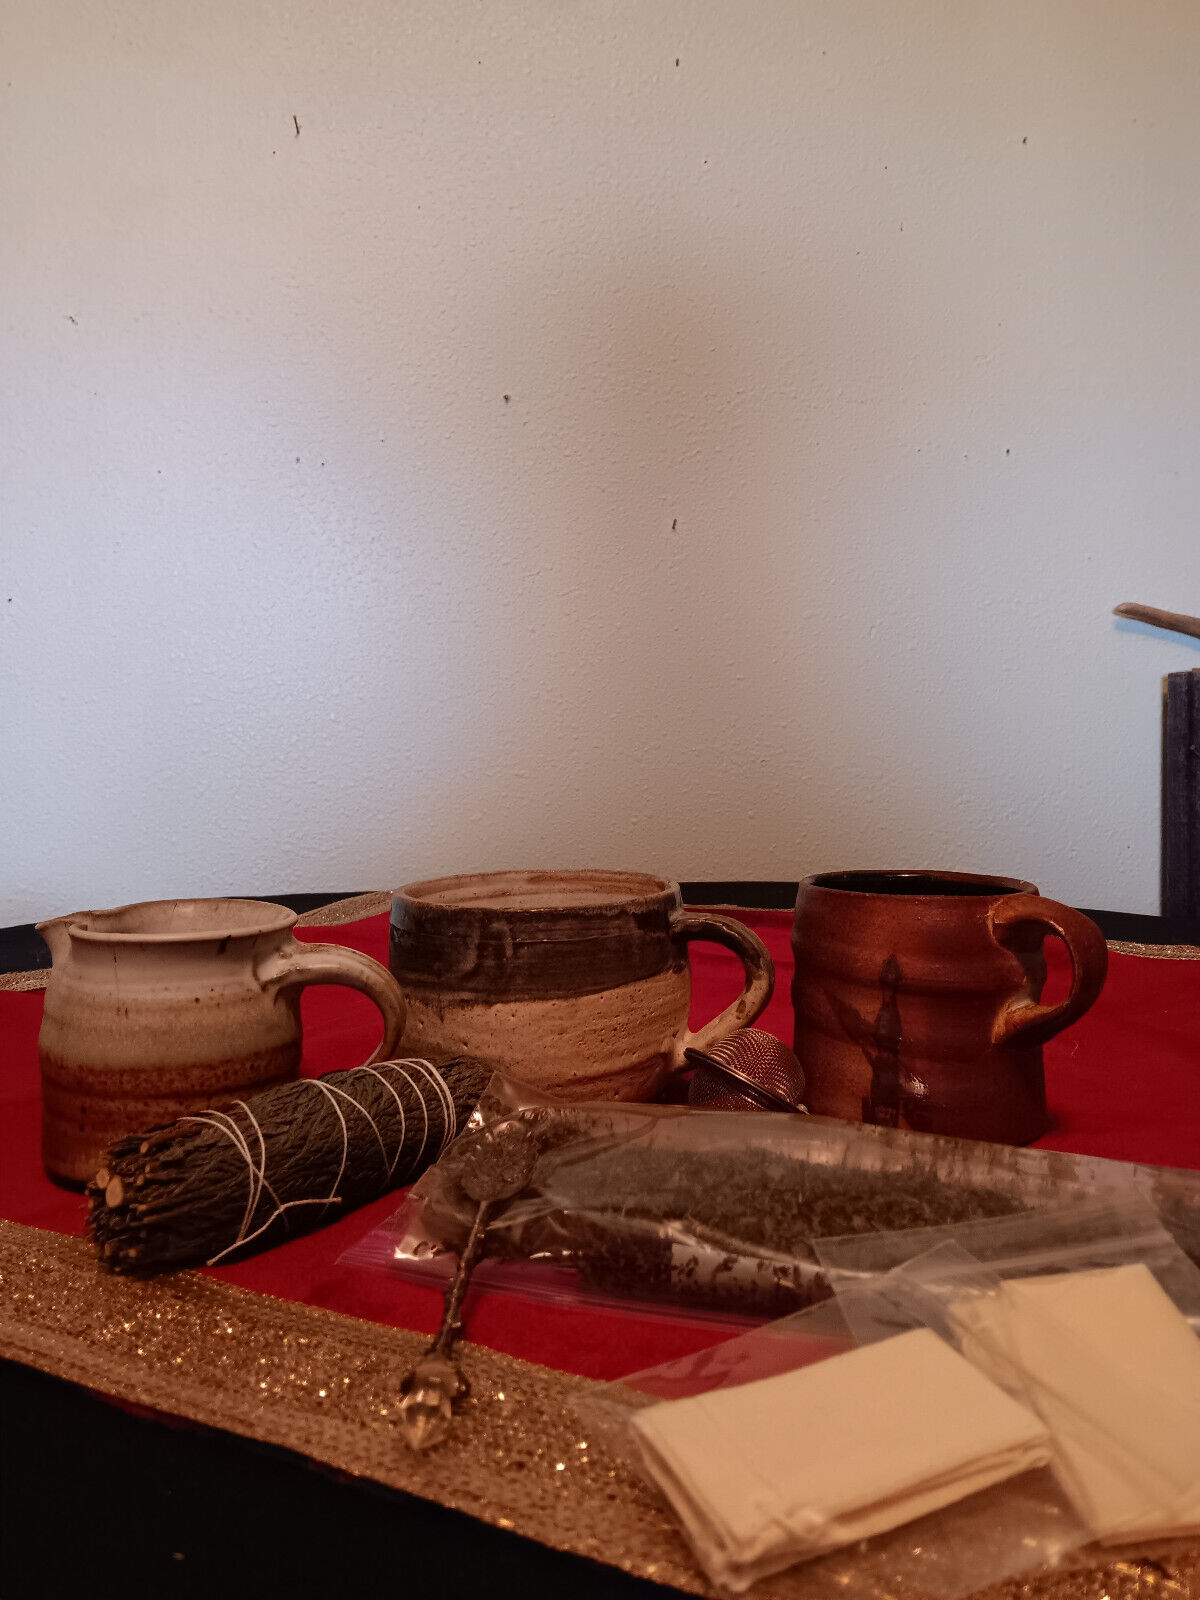 Vintage Pottery Tea Cup, Coffee Cup, Creamer, Moroccan Tea, Tea Bags